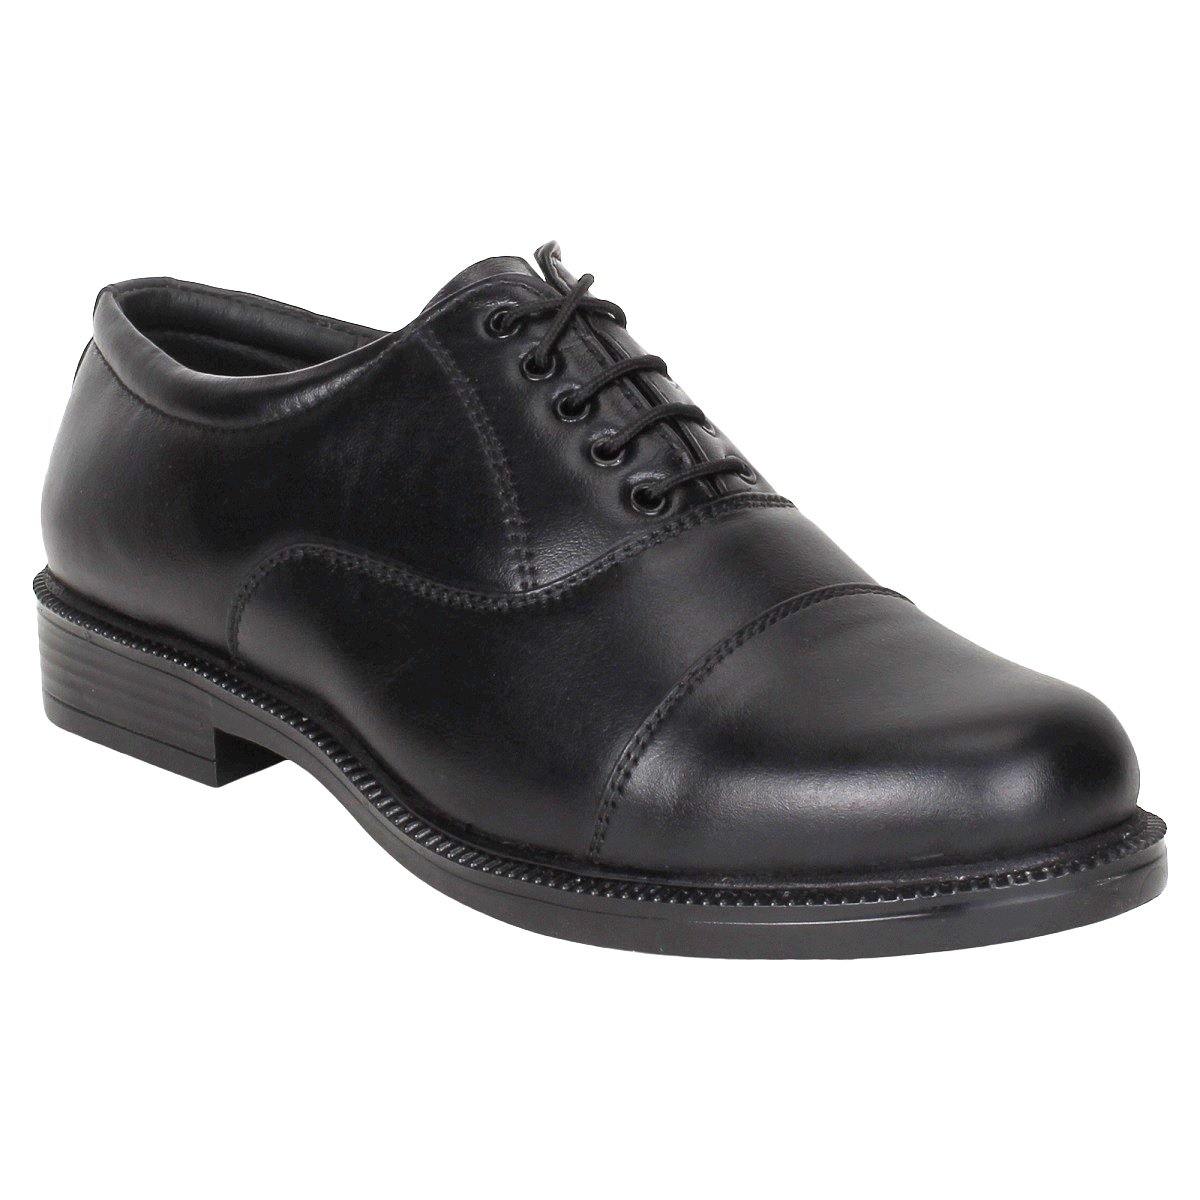 Police Shoes for Men-Minor Defect - SeeandWear